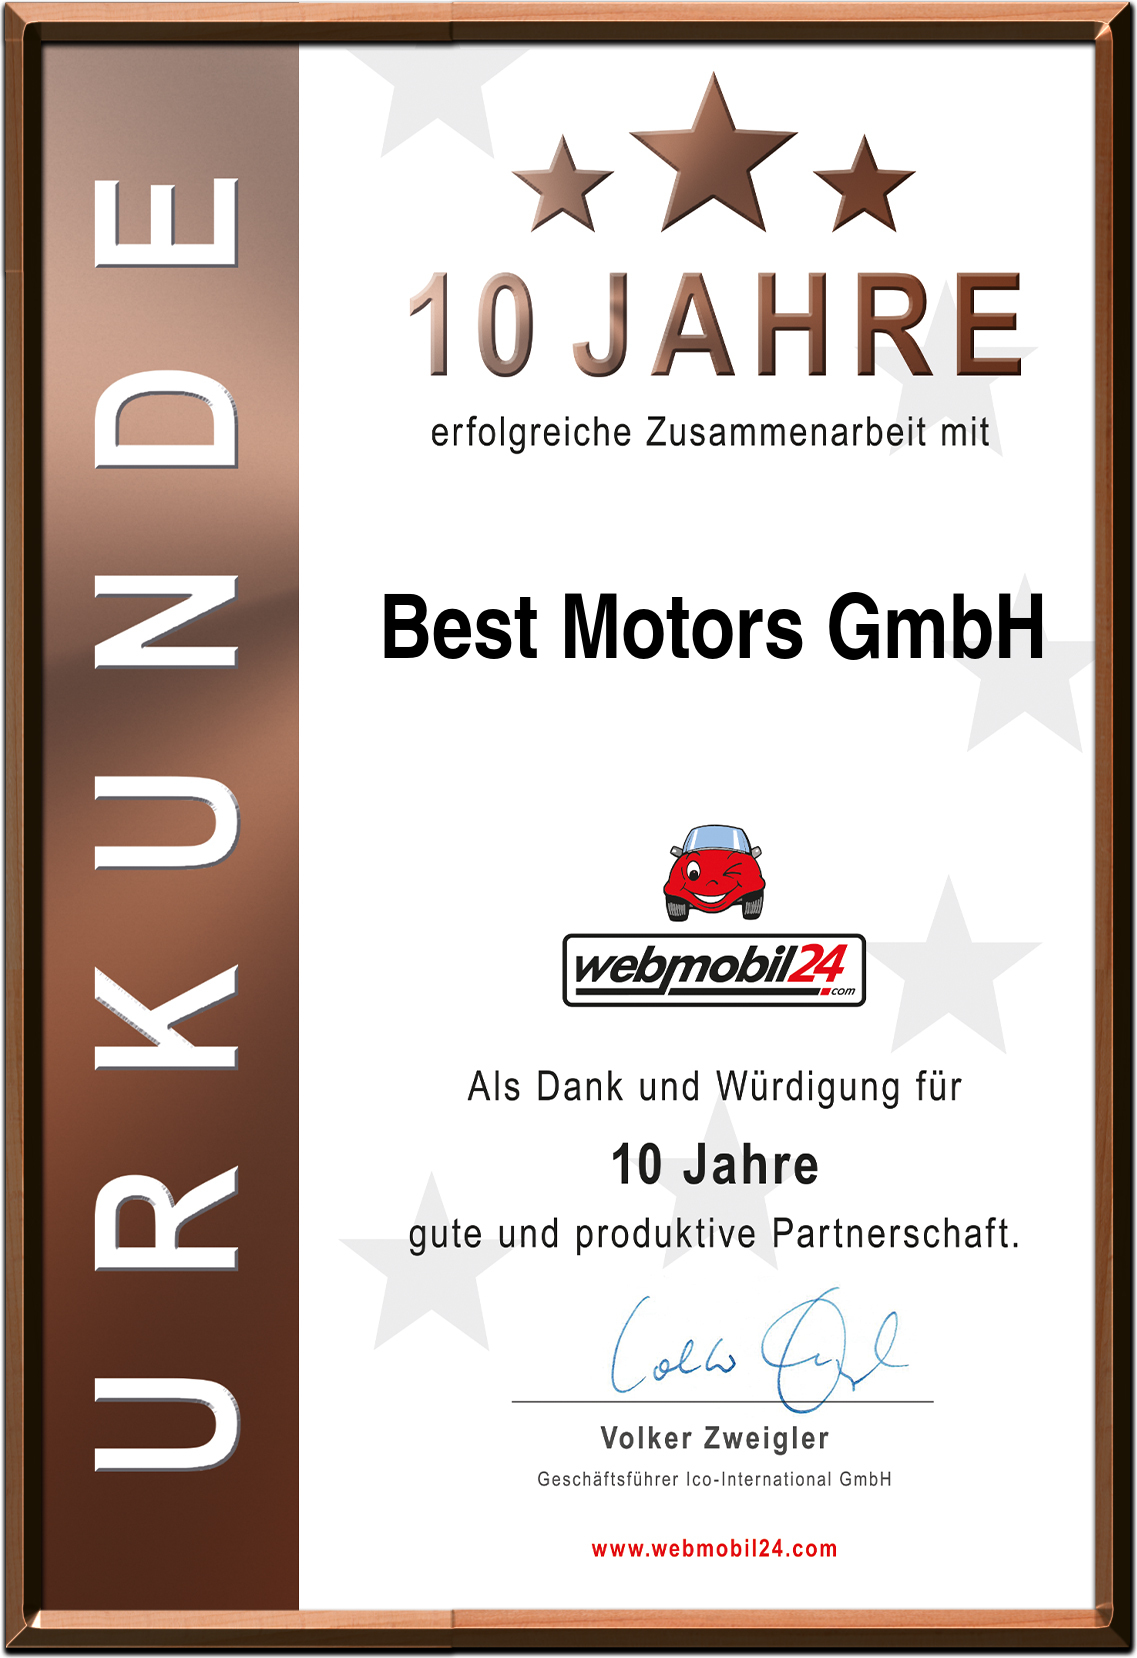 Best Motors GmbH